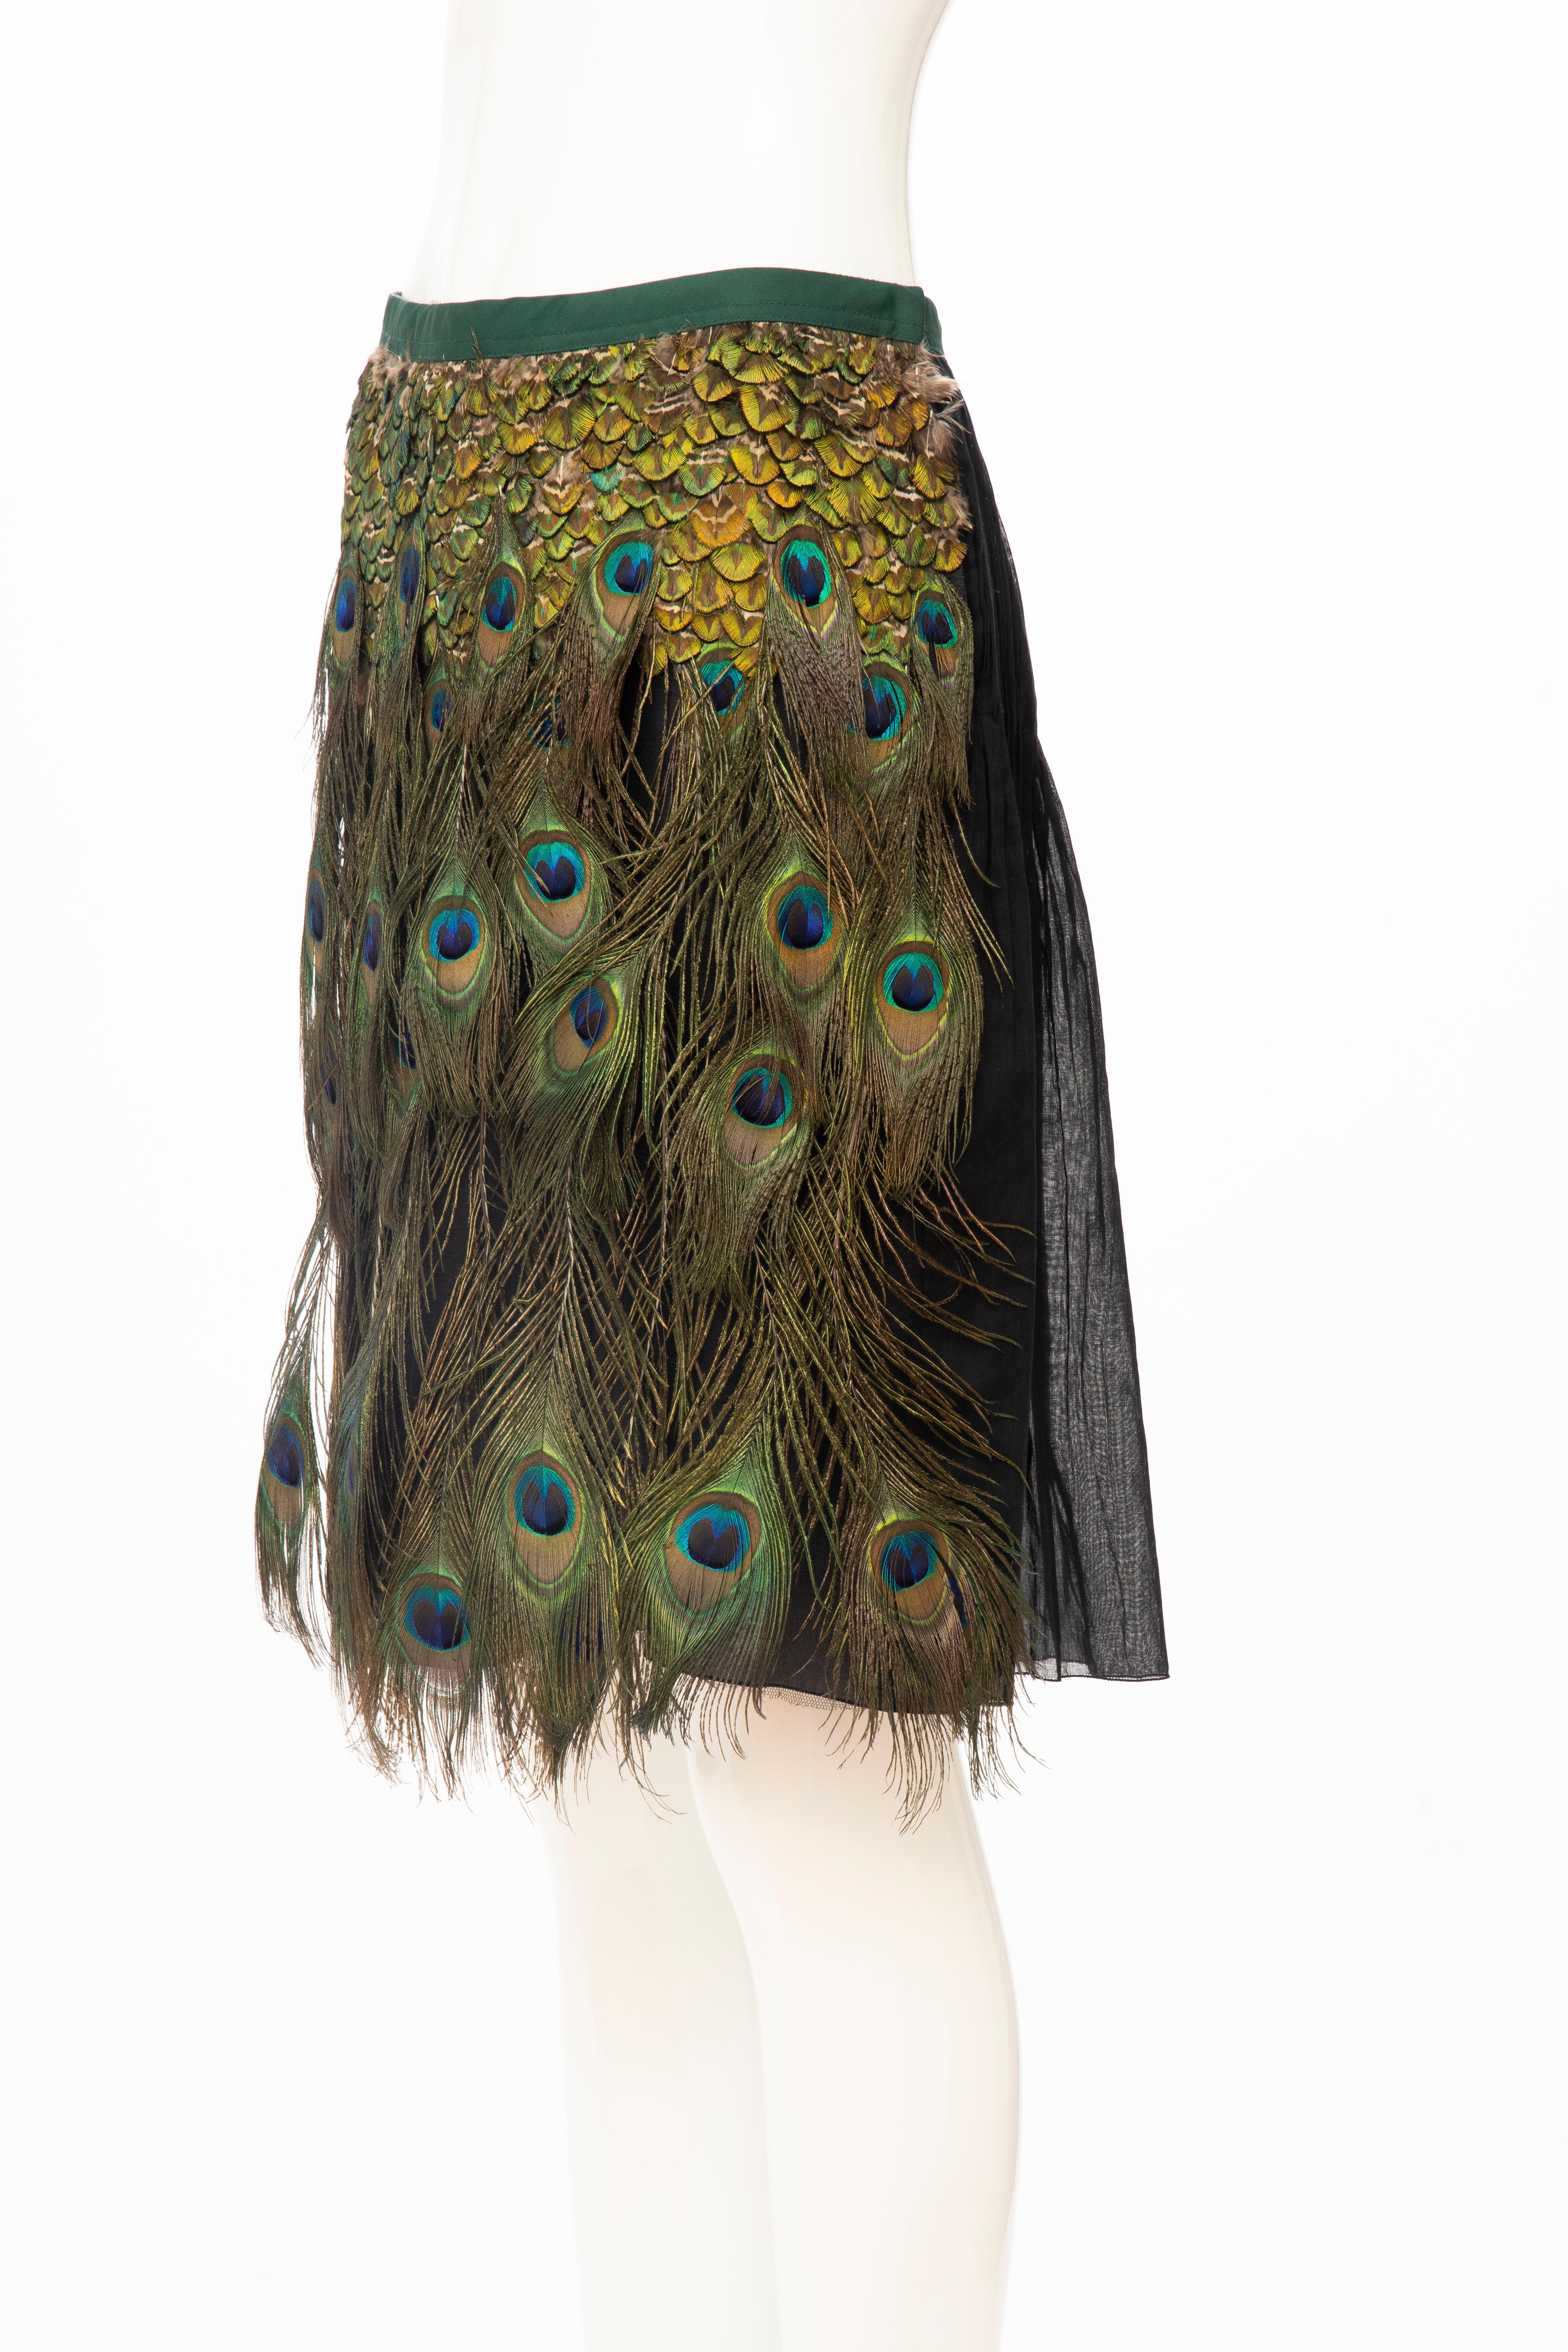 Prada Runway Black Cotton Pleated Skirt Appliquéd Peacock Feathers, Spring 2005 For Sale 4